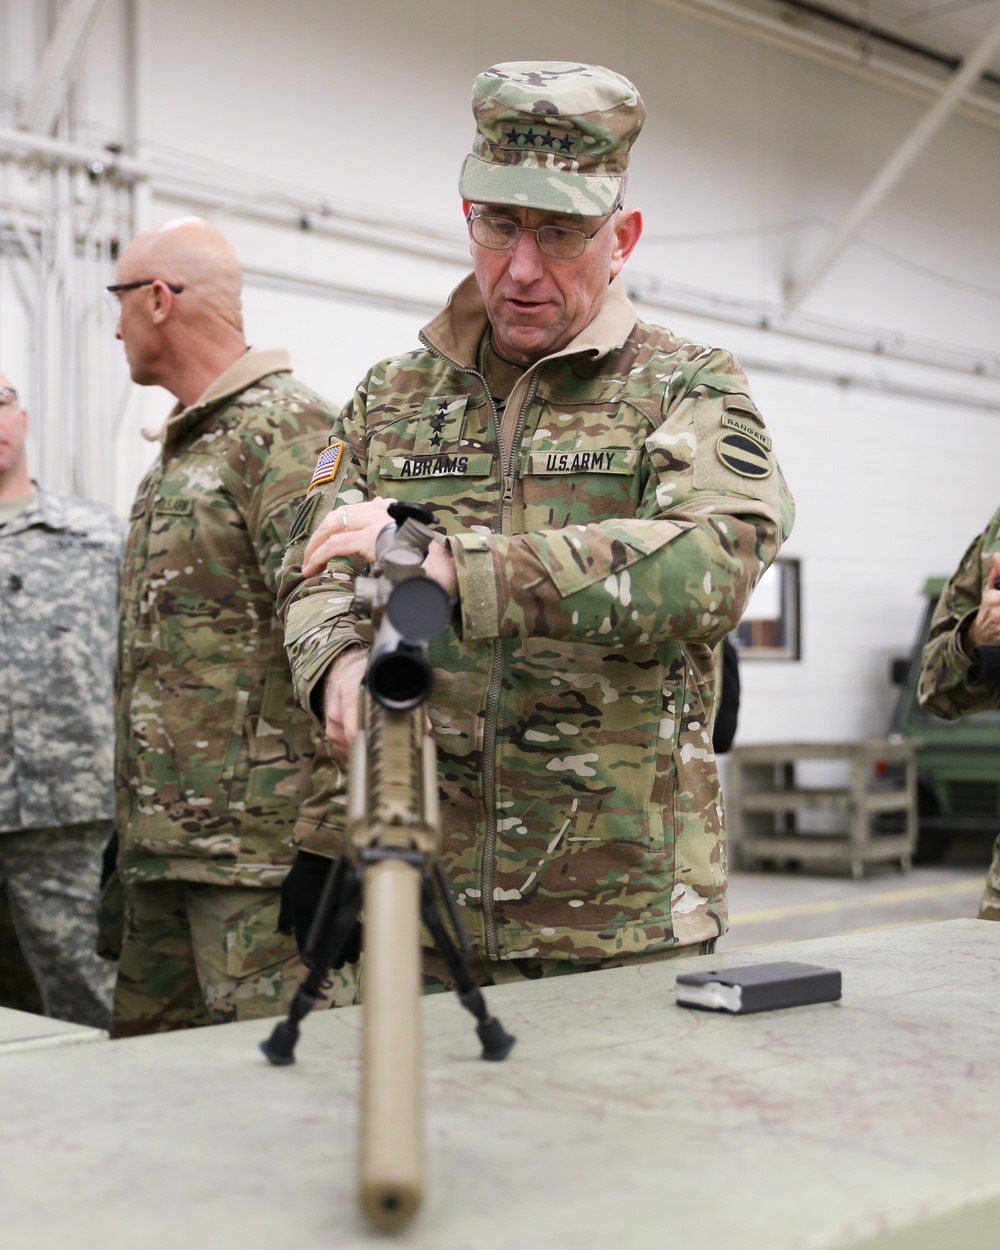 Gen. Robert Abrams, FORSCOM commander, handling an M110 Semi-Automatic Sniper System at Iowa National Guard's Sustainment Training Center